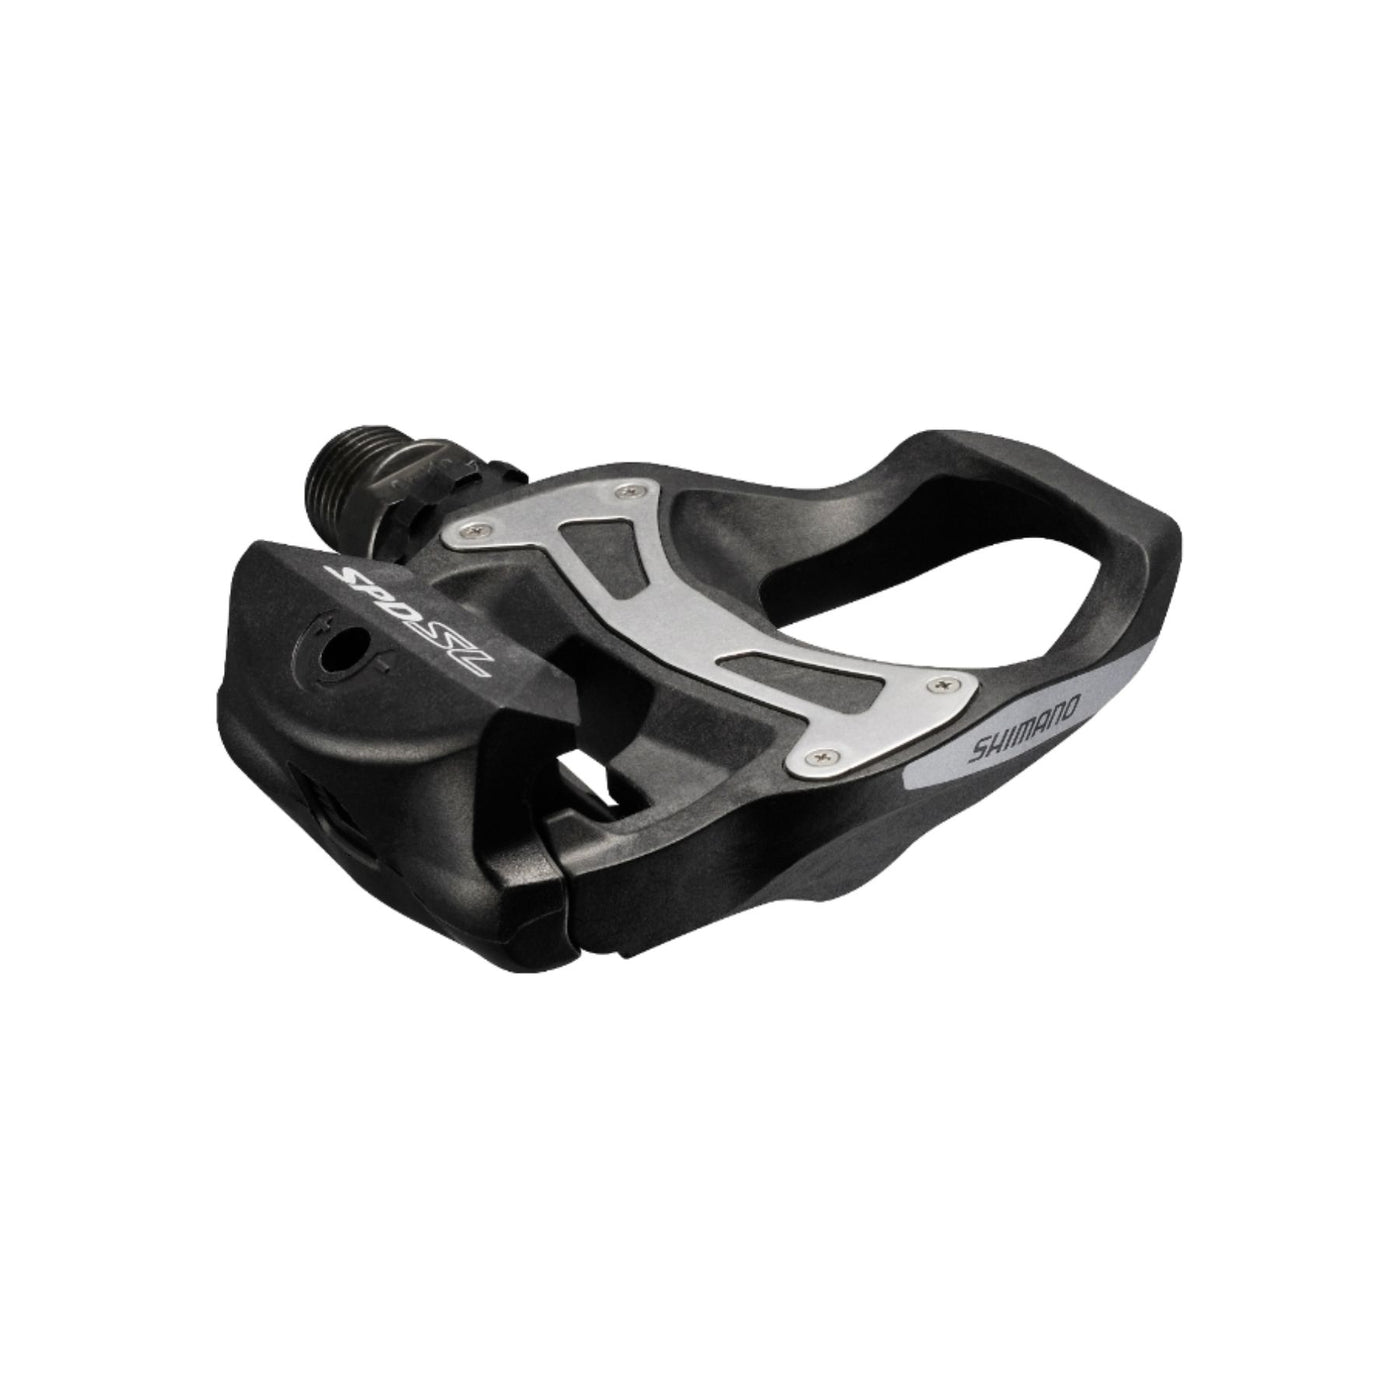 Shimano Tiagra PD-R550 SPD-SL Black Pedals